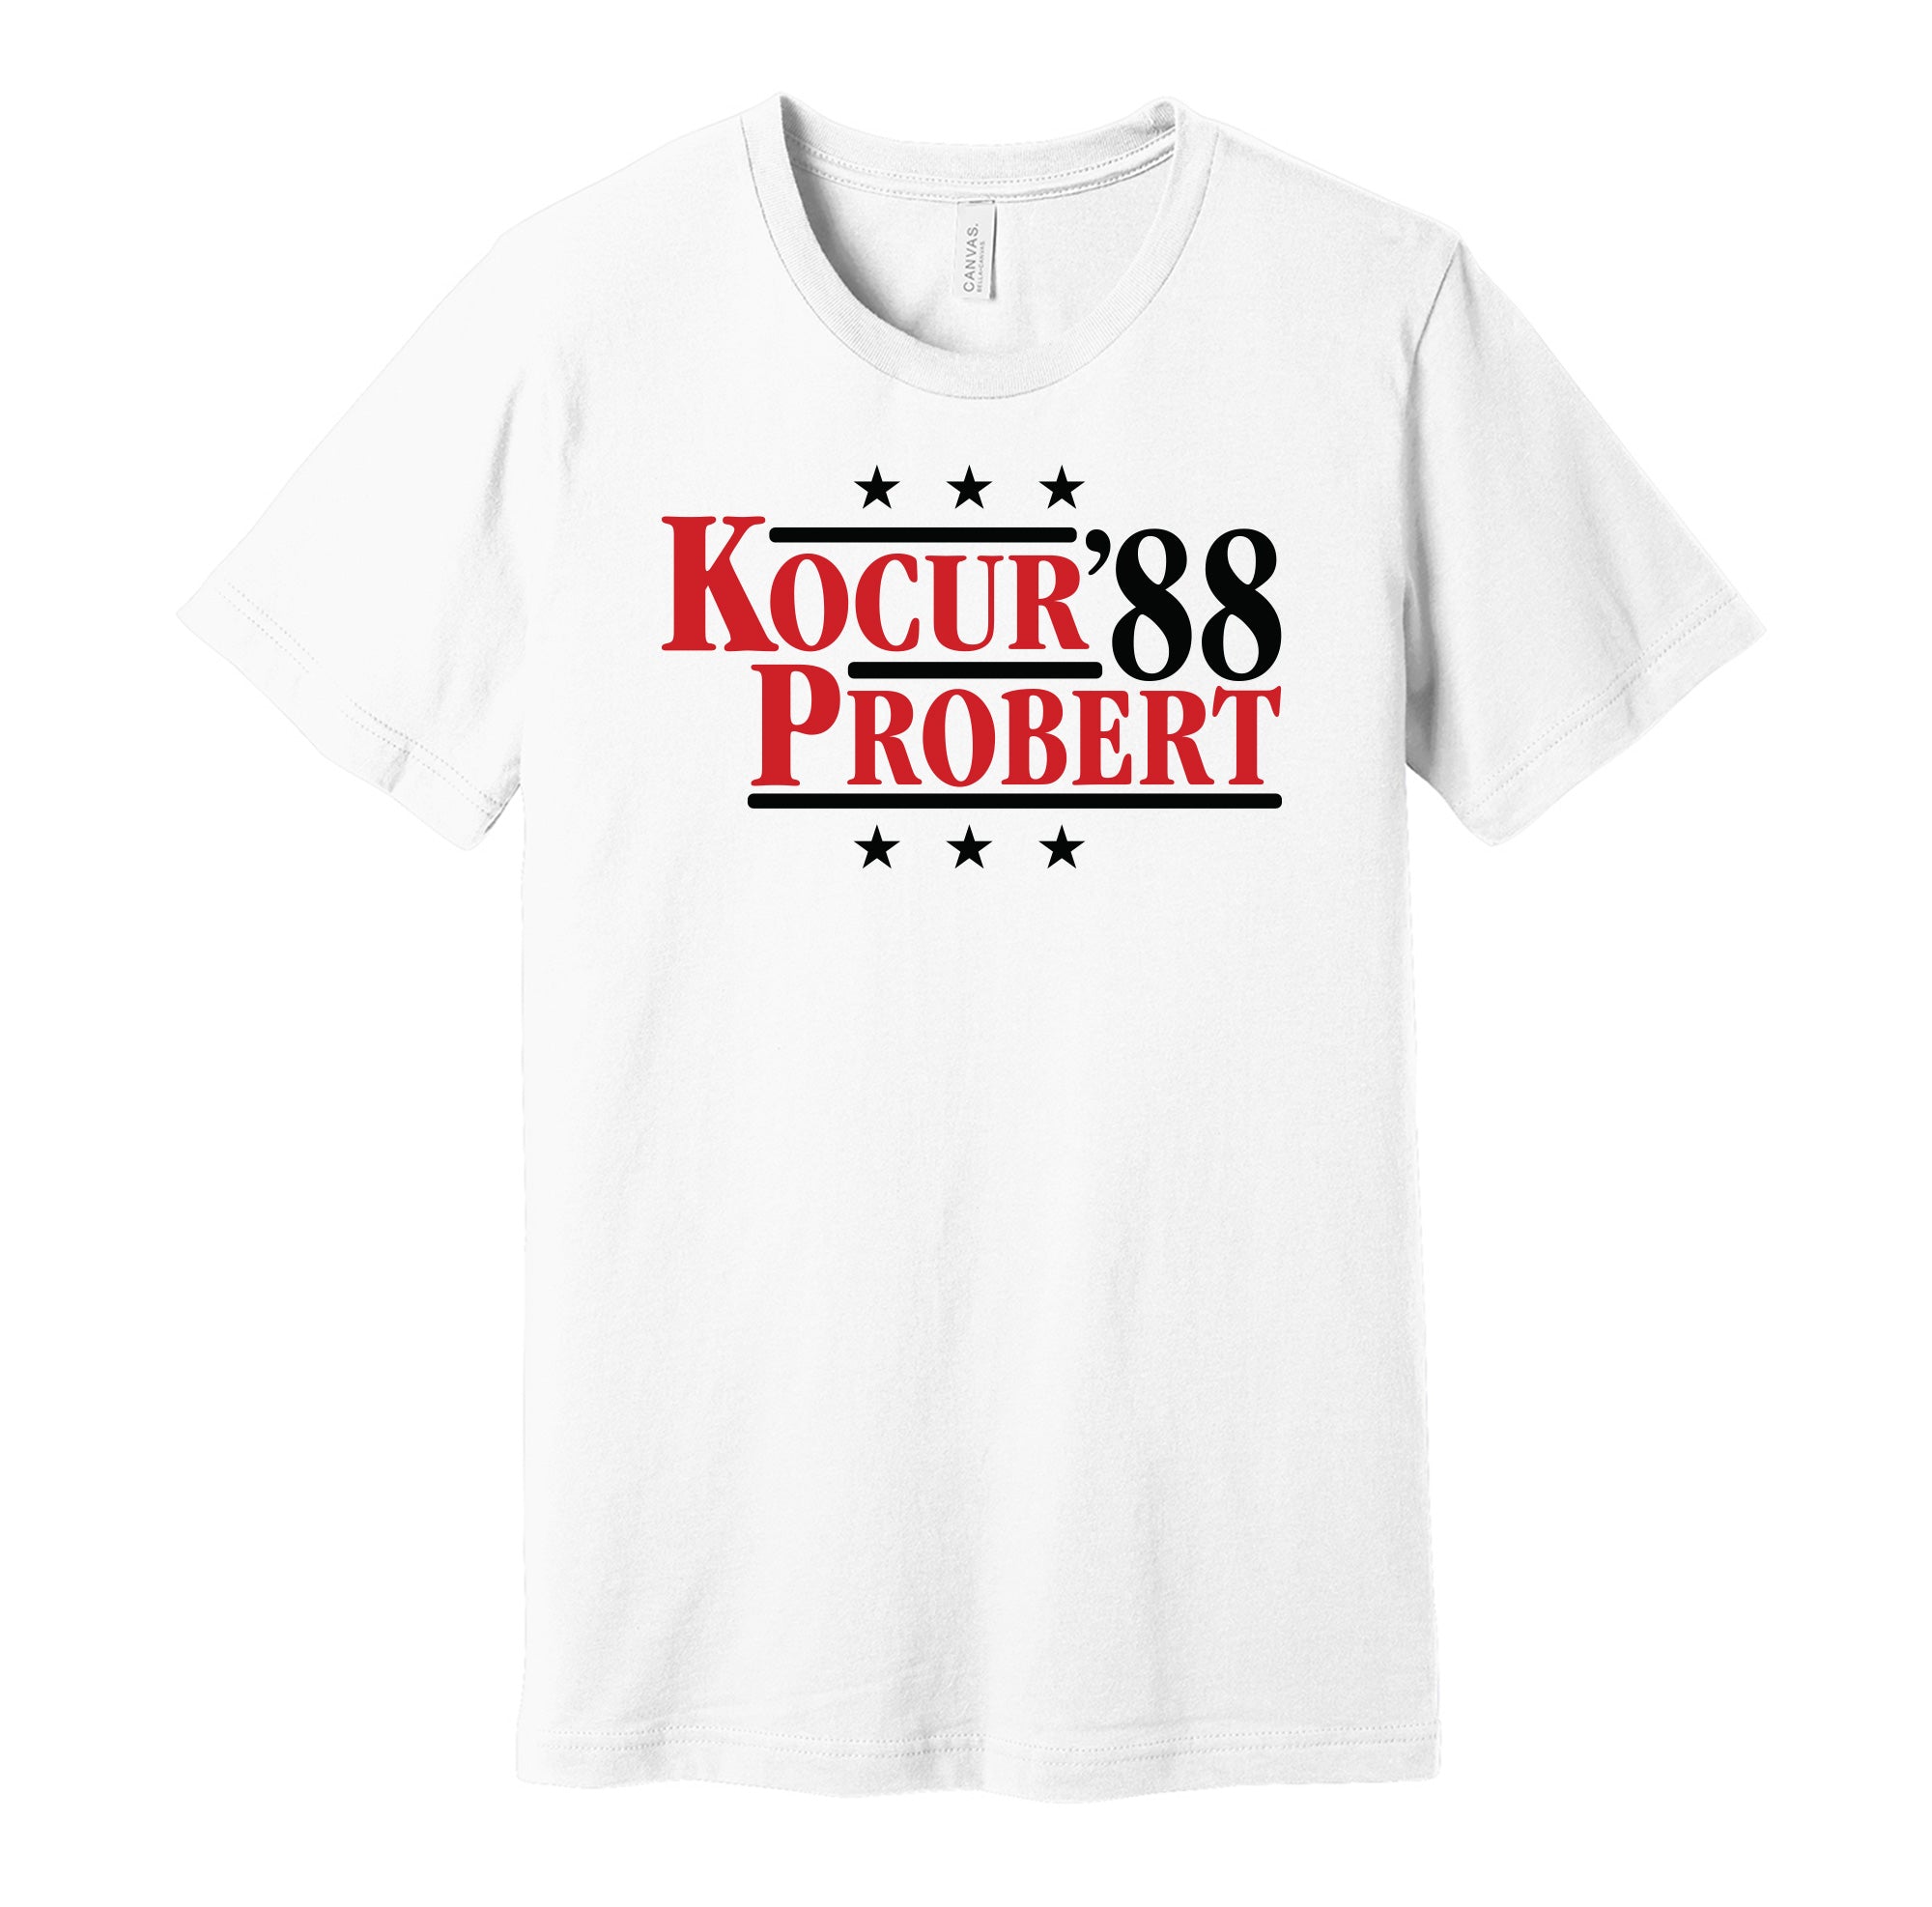 The Mitten State Bruise Brothers T-Shirt: Bob Probert & Joey Kocur 2XL